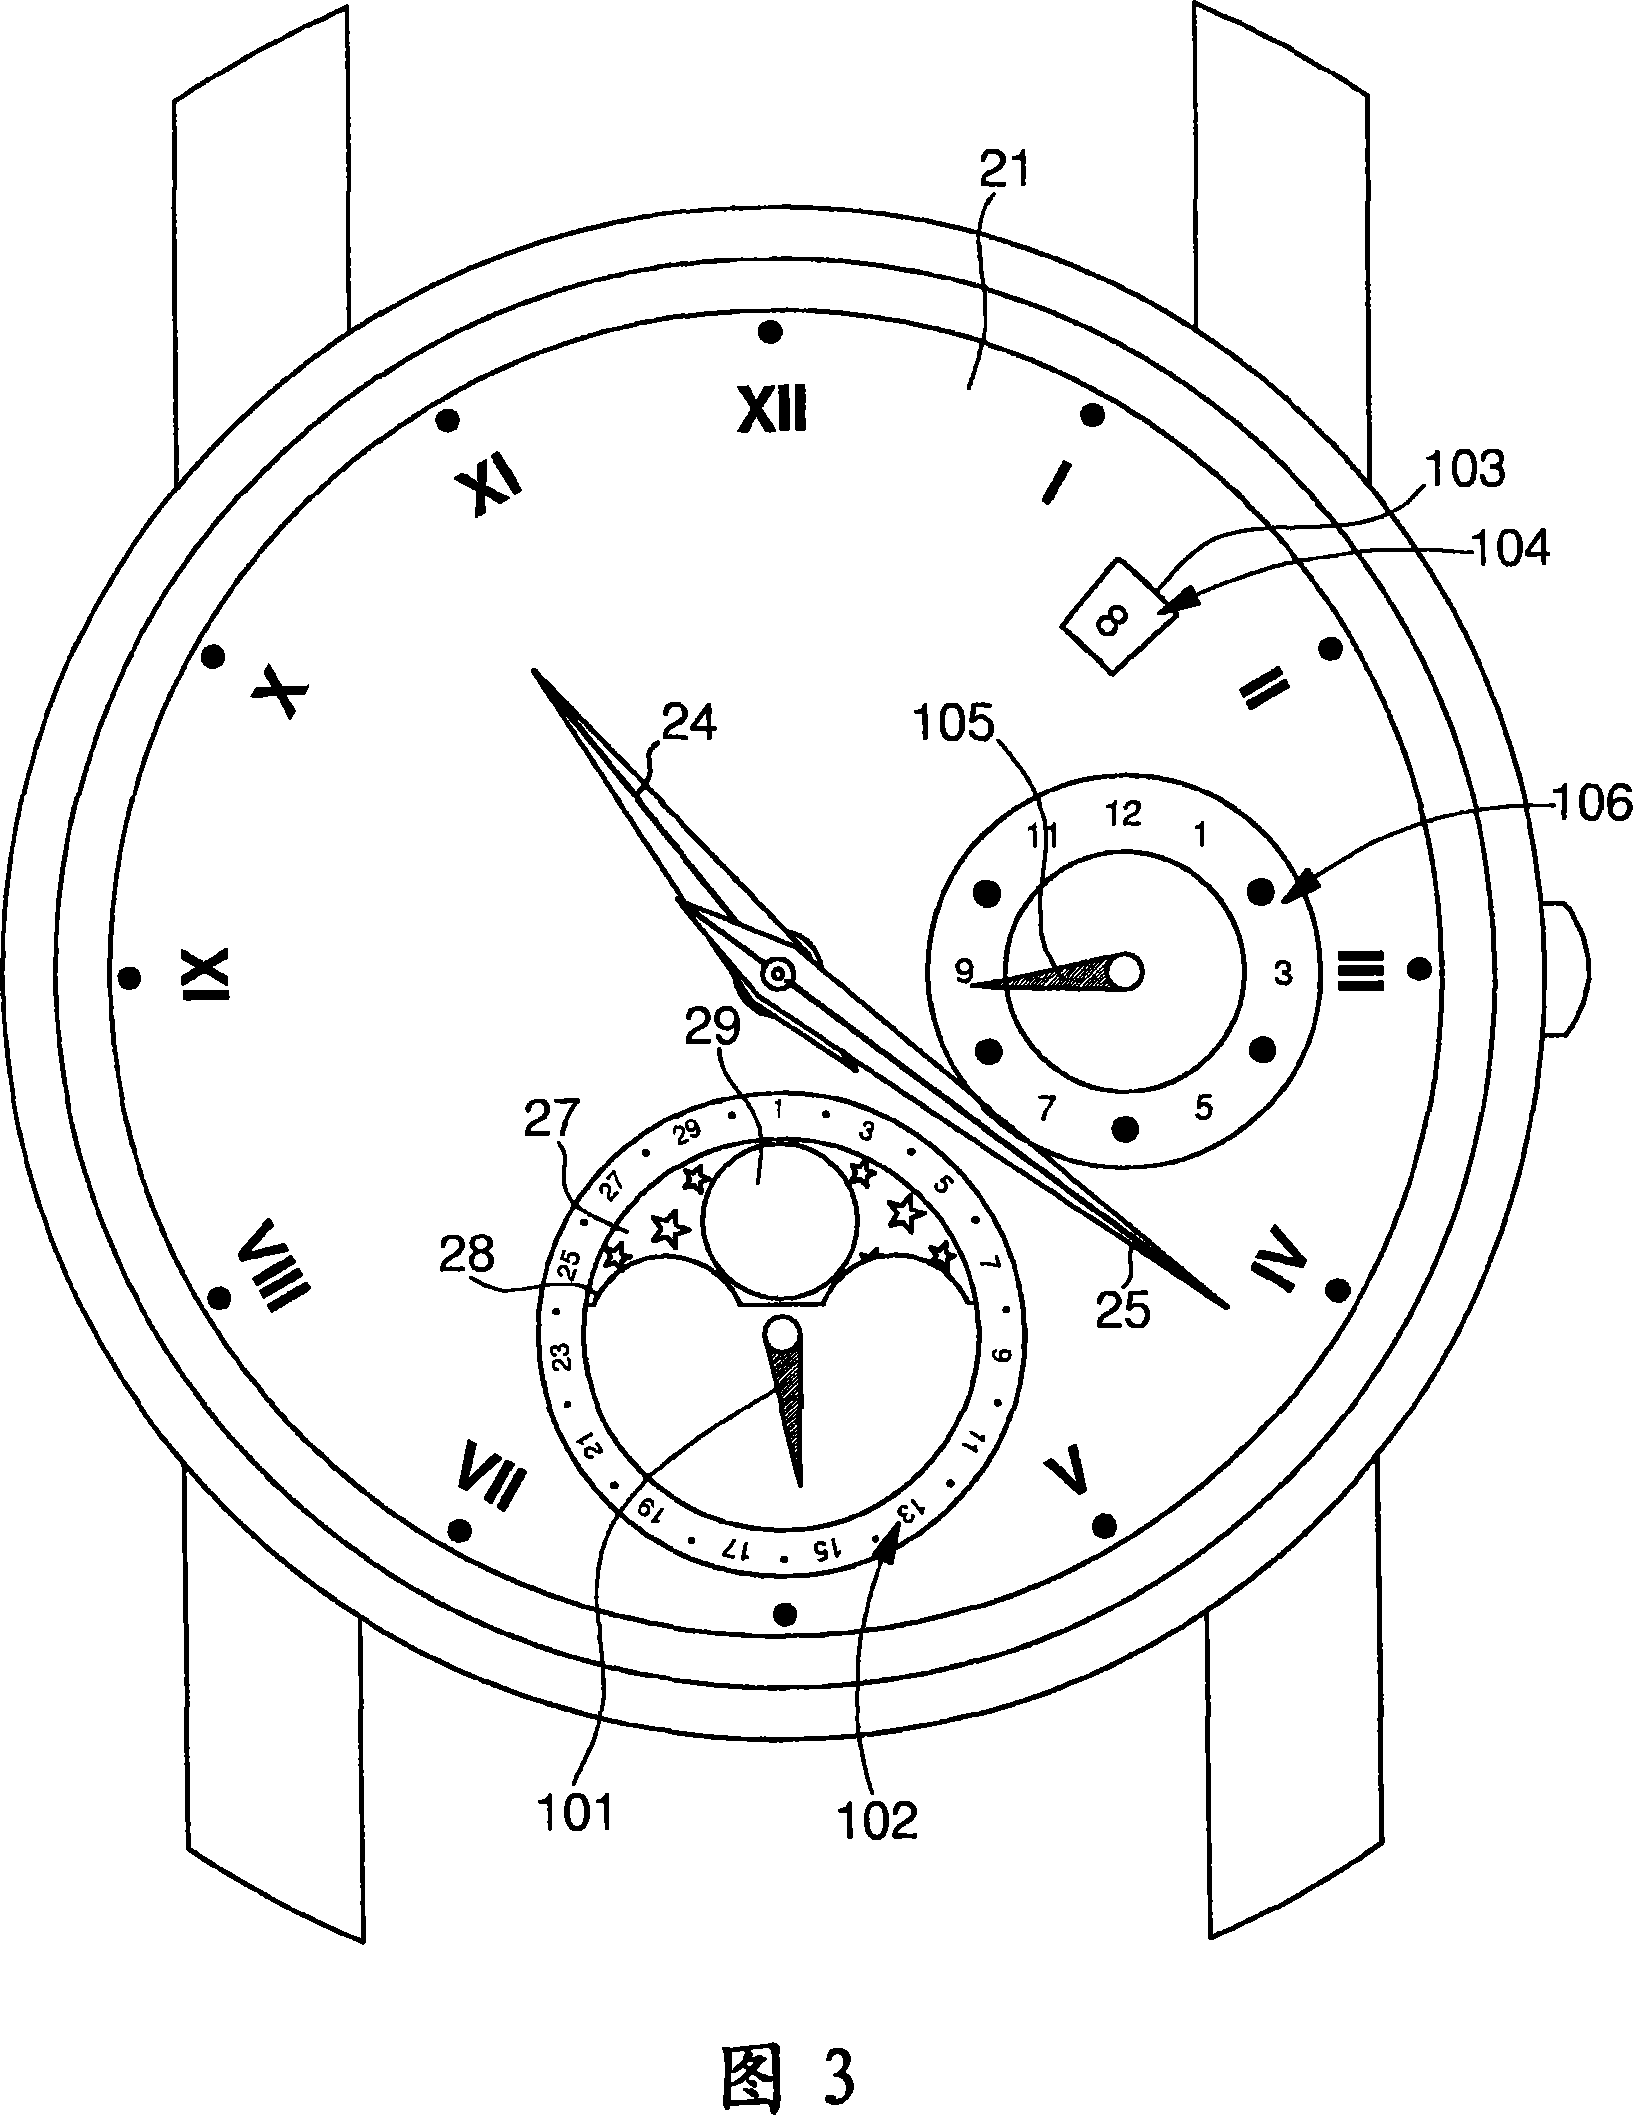 Timepiece comprising a mechanical chinese calendar